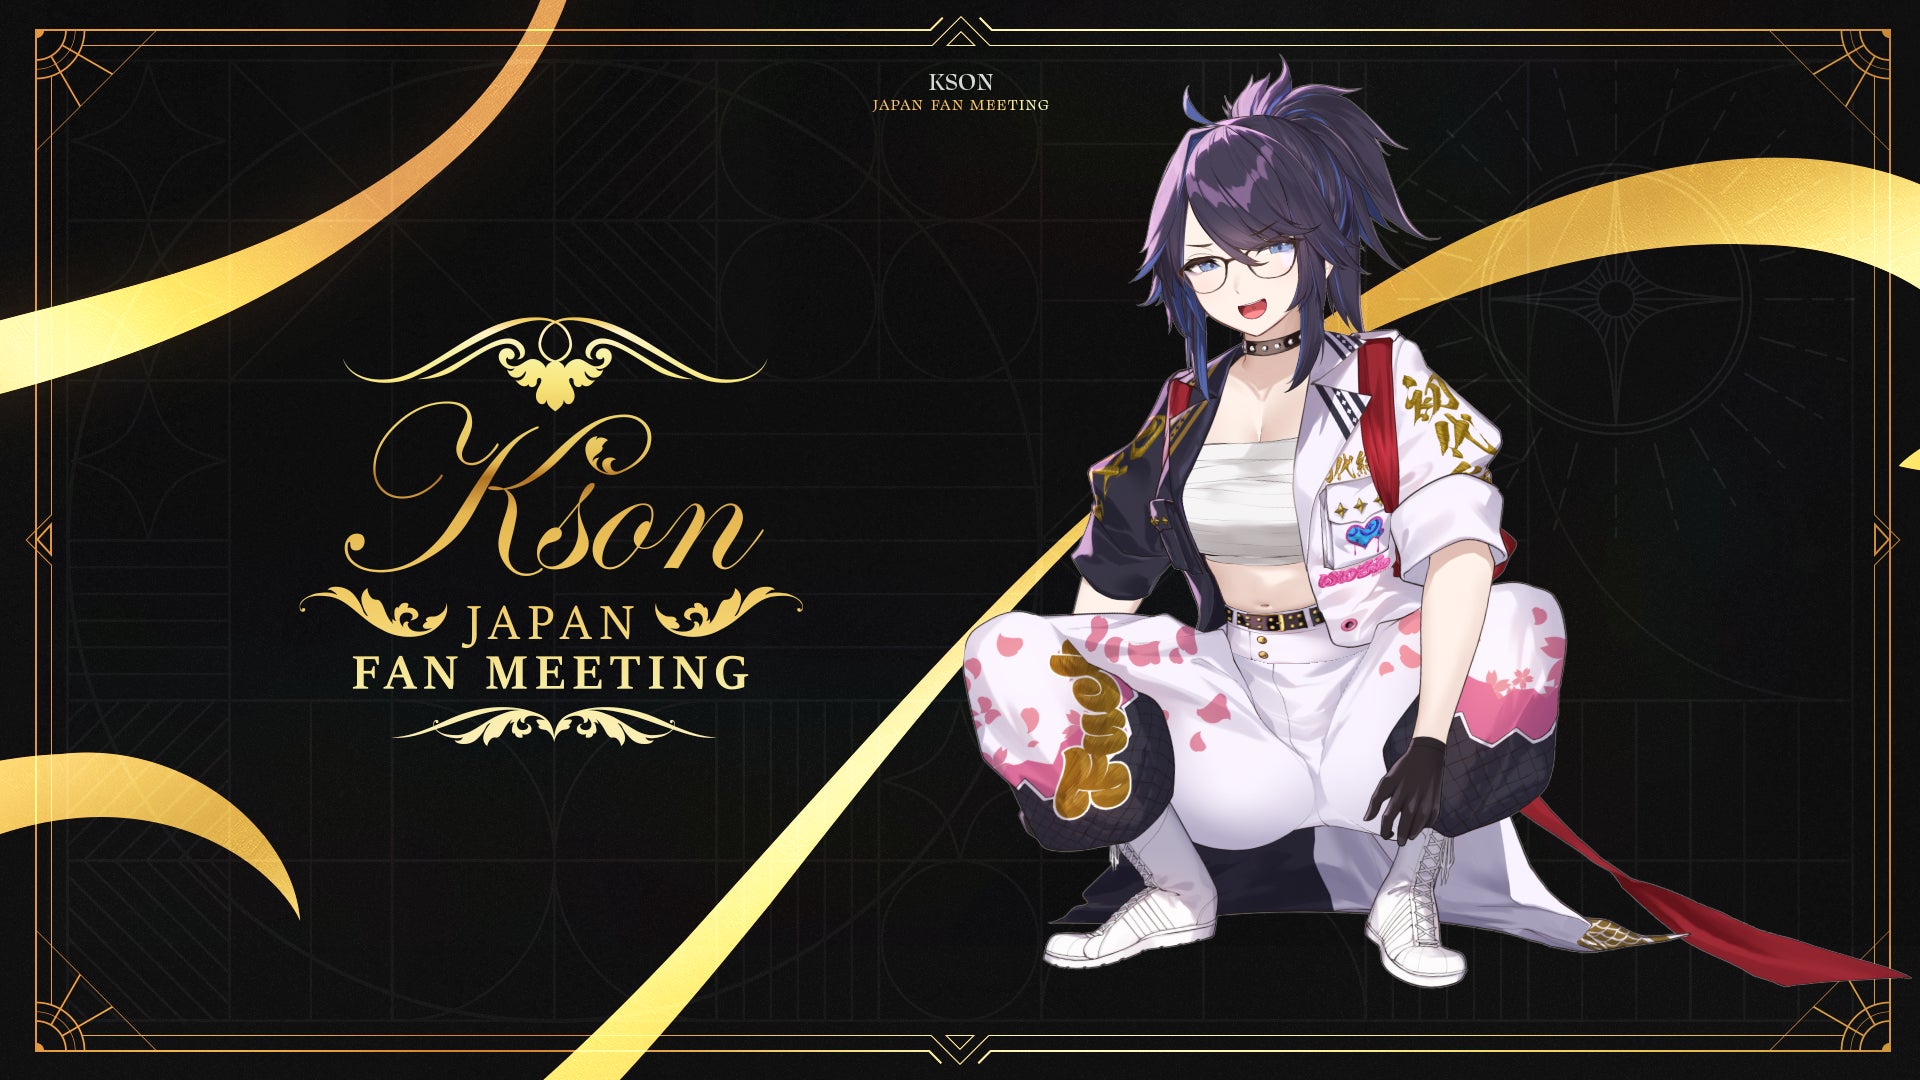 VTuber事務所「VShojo」、所属タレント「kson(ケイソン)」活動2周年配信にてリアルイベント「Kson Japan Fan Meeting」開催を発表。のサブ画像9